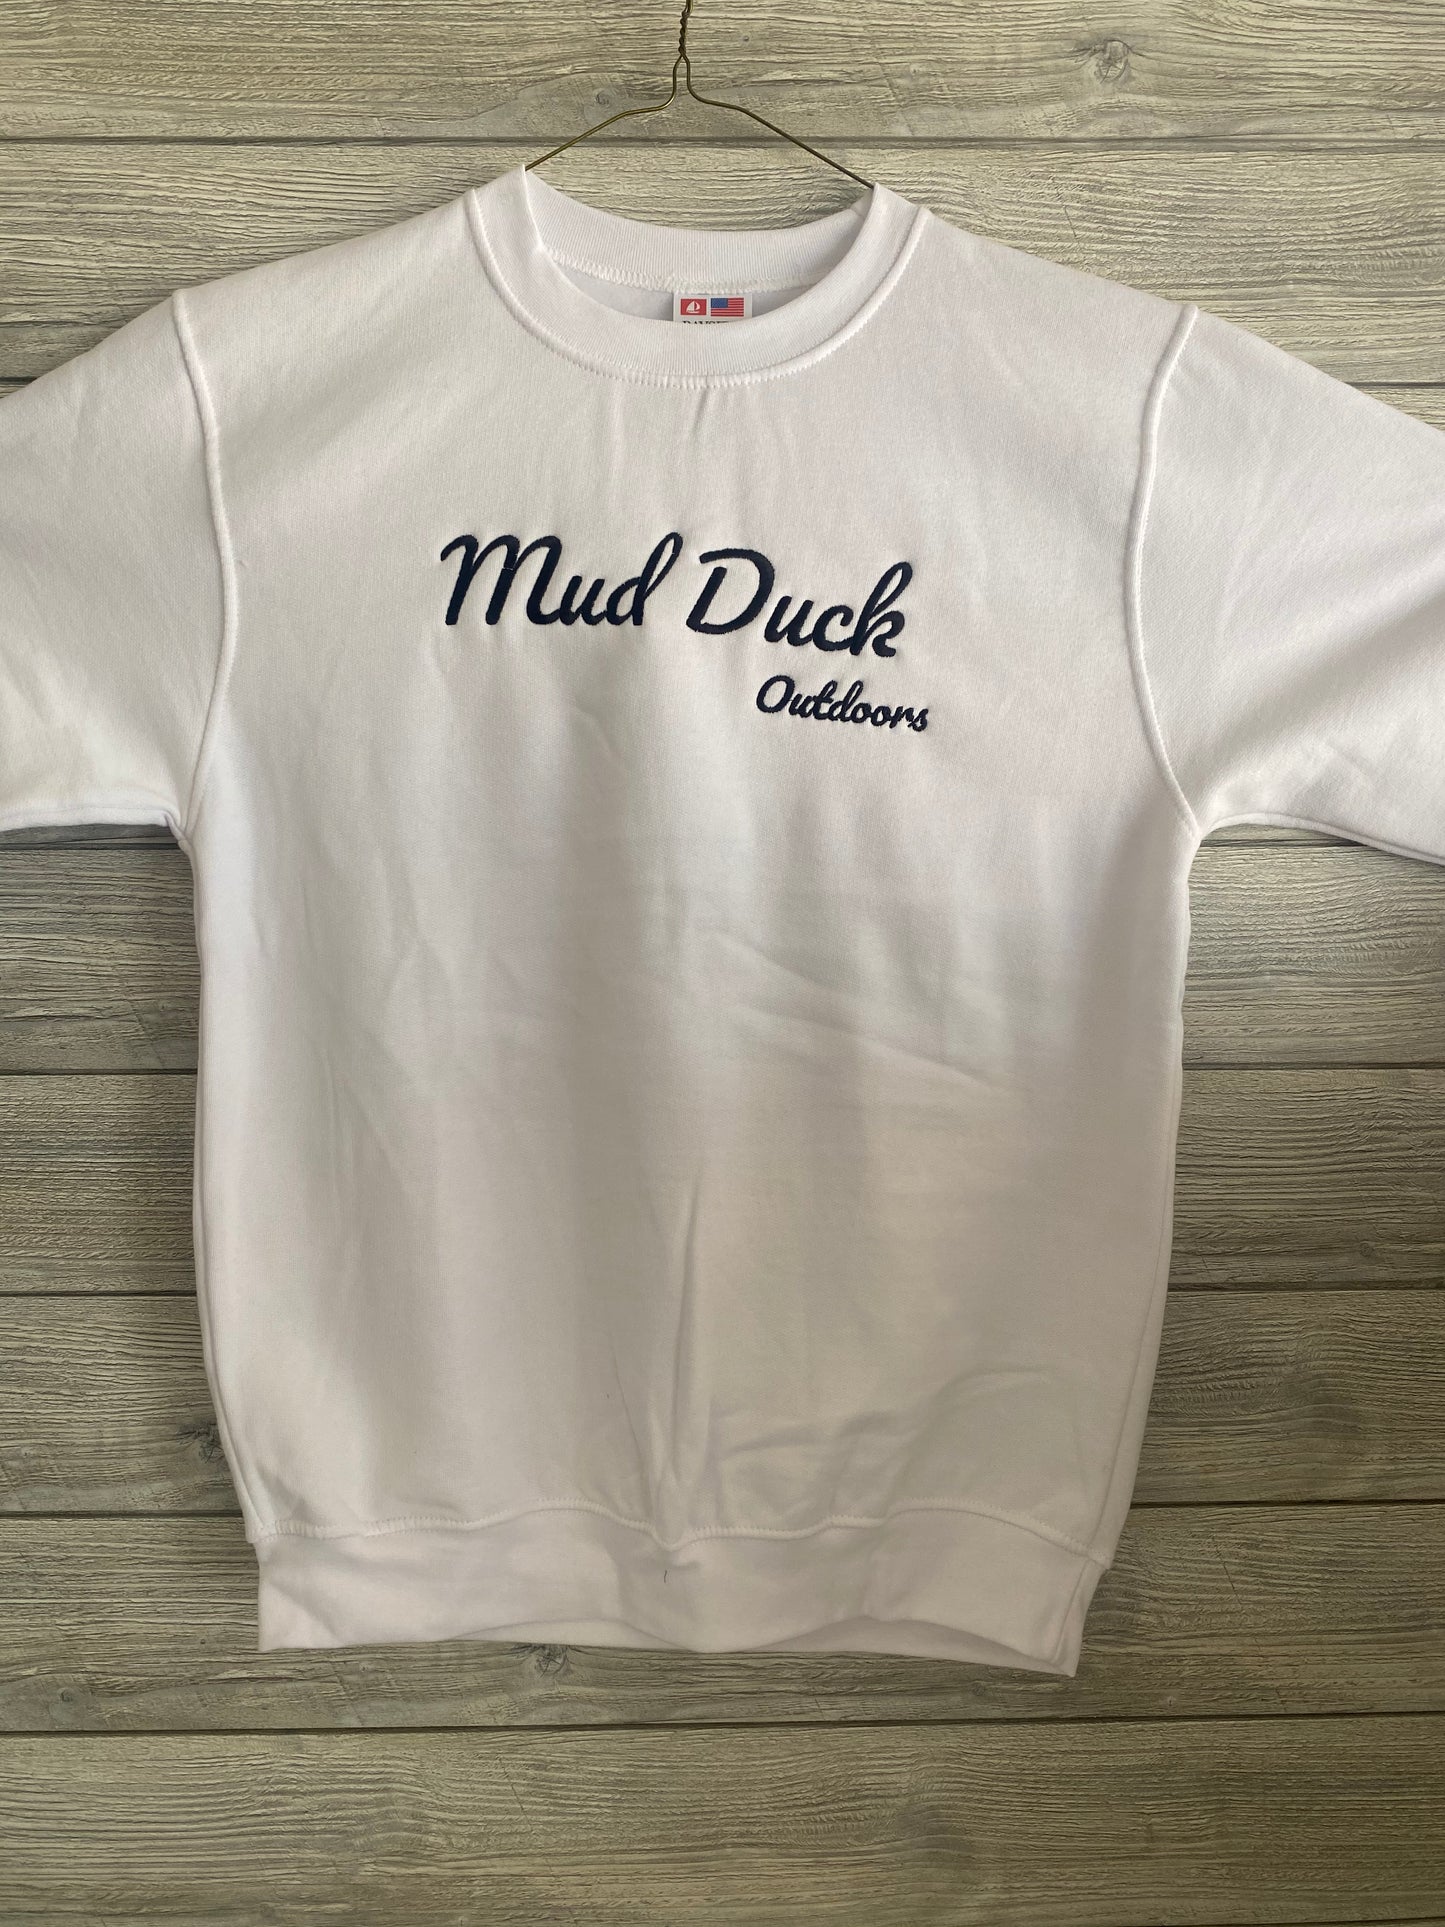 LIMITED EDITION - Mud Duck Outdoors Original CrewNeck - White - Original Mallard